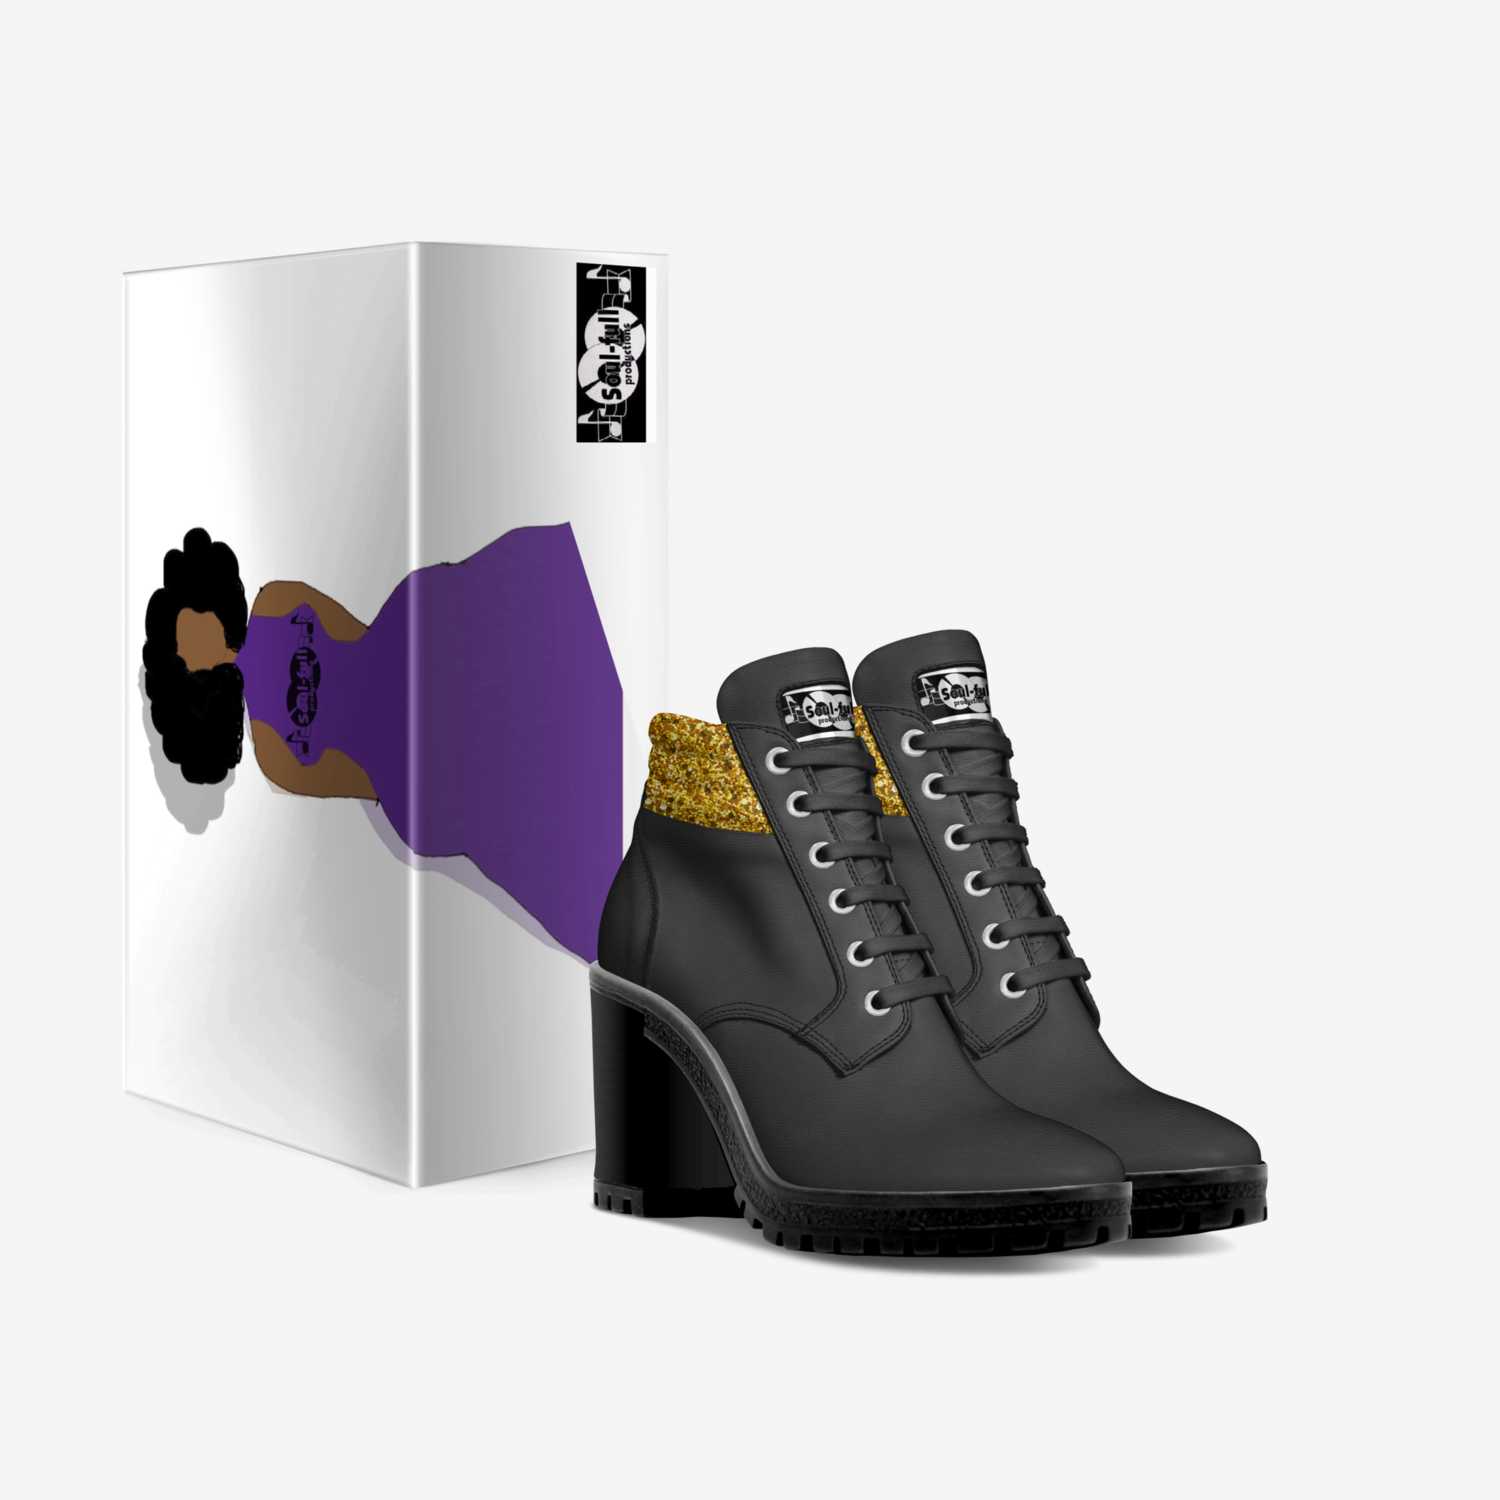 BONITA SEÑORITA 3 custom made in Italy shoes by Grande Gato | Box view